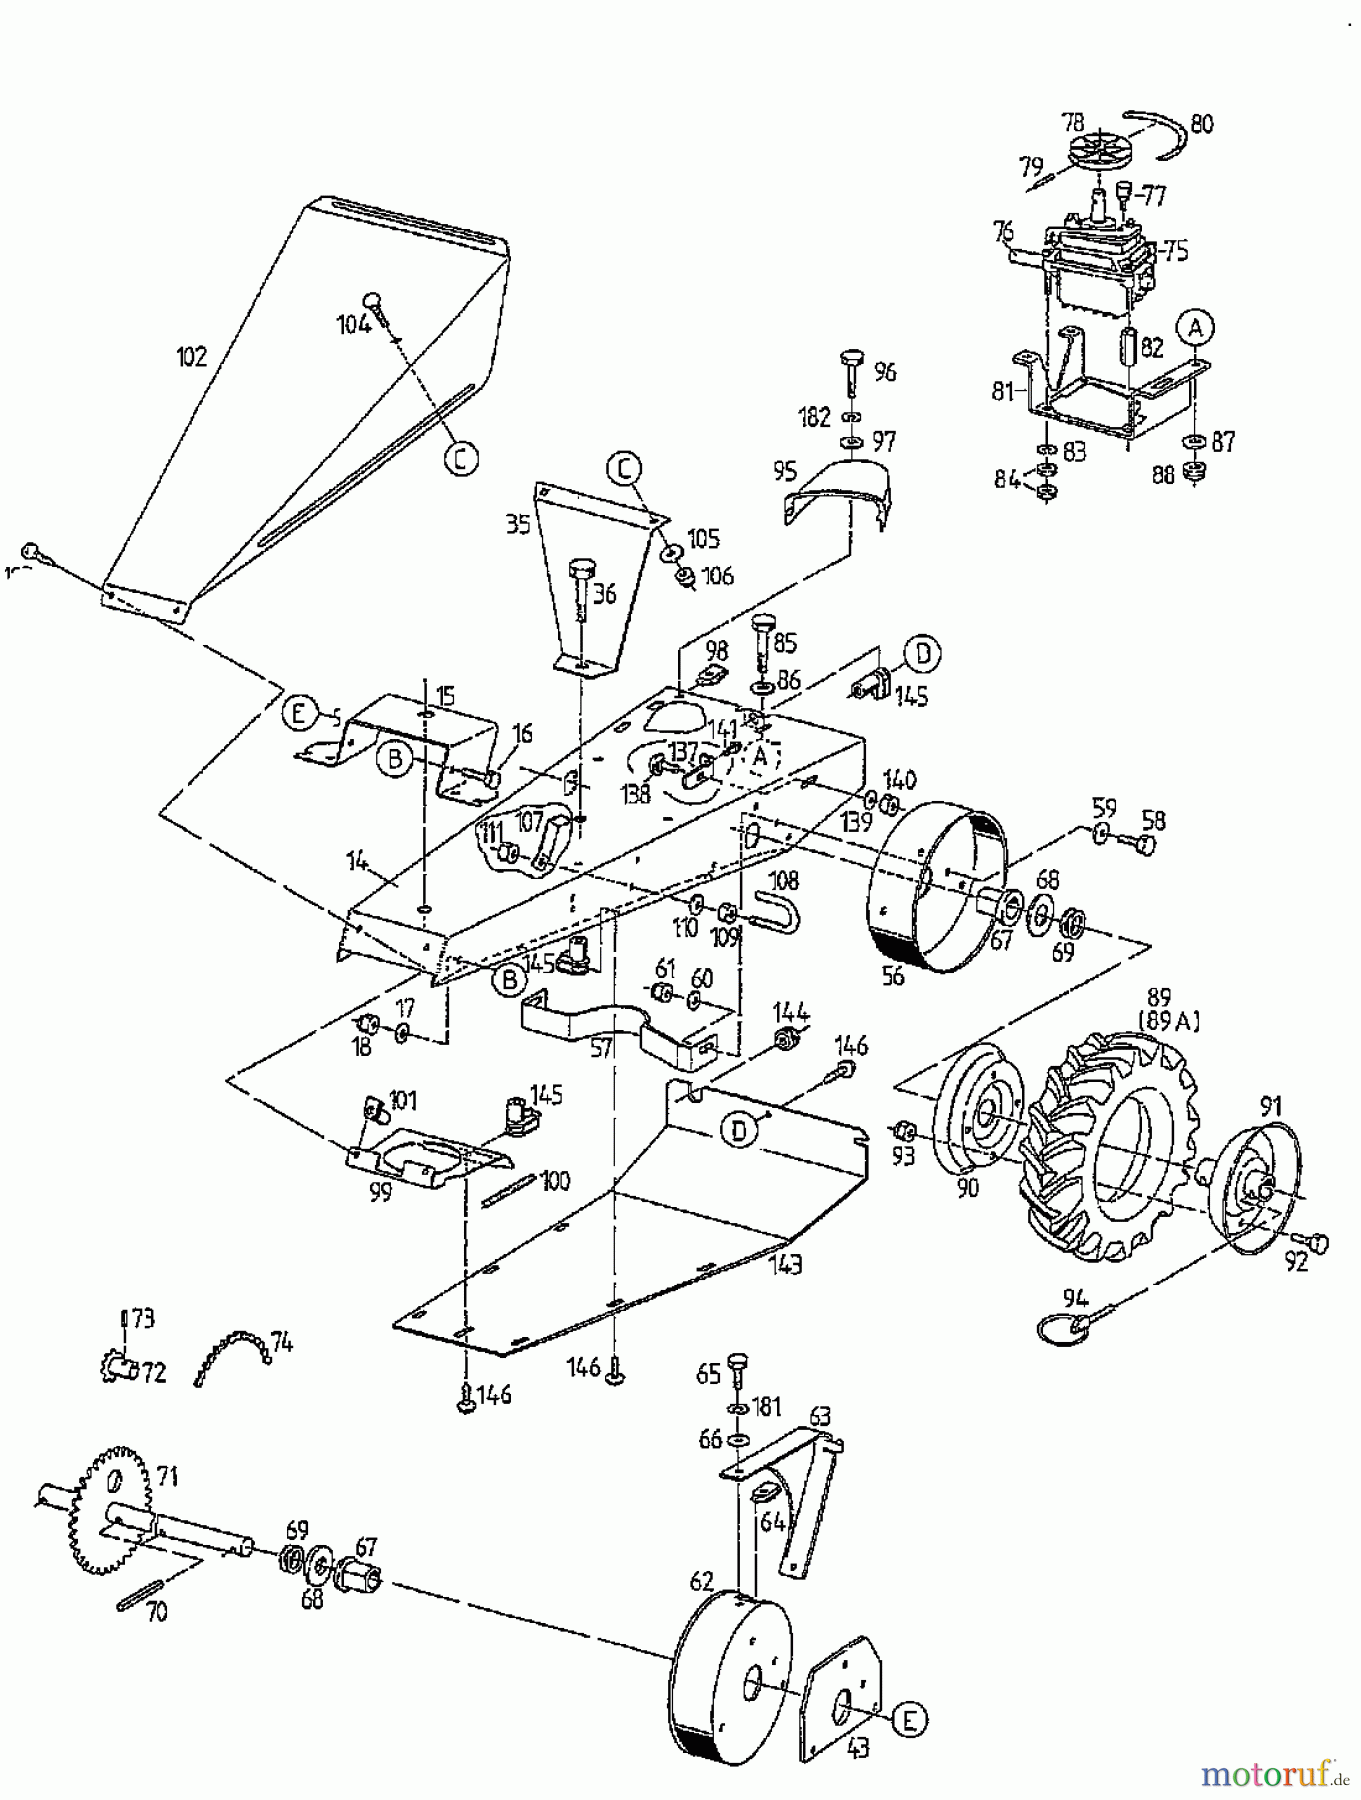  Gutbrod Cutter bar mower BM 700 07510.04  (1997) Drive system, Wheels